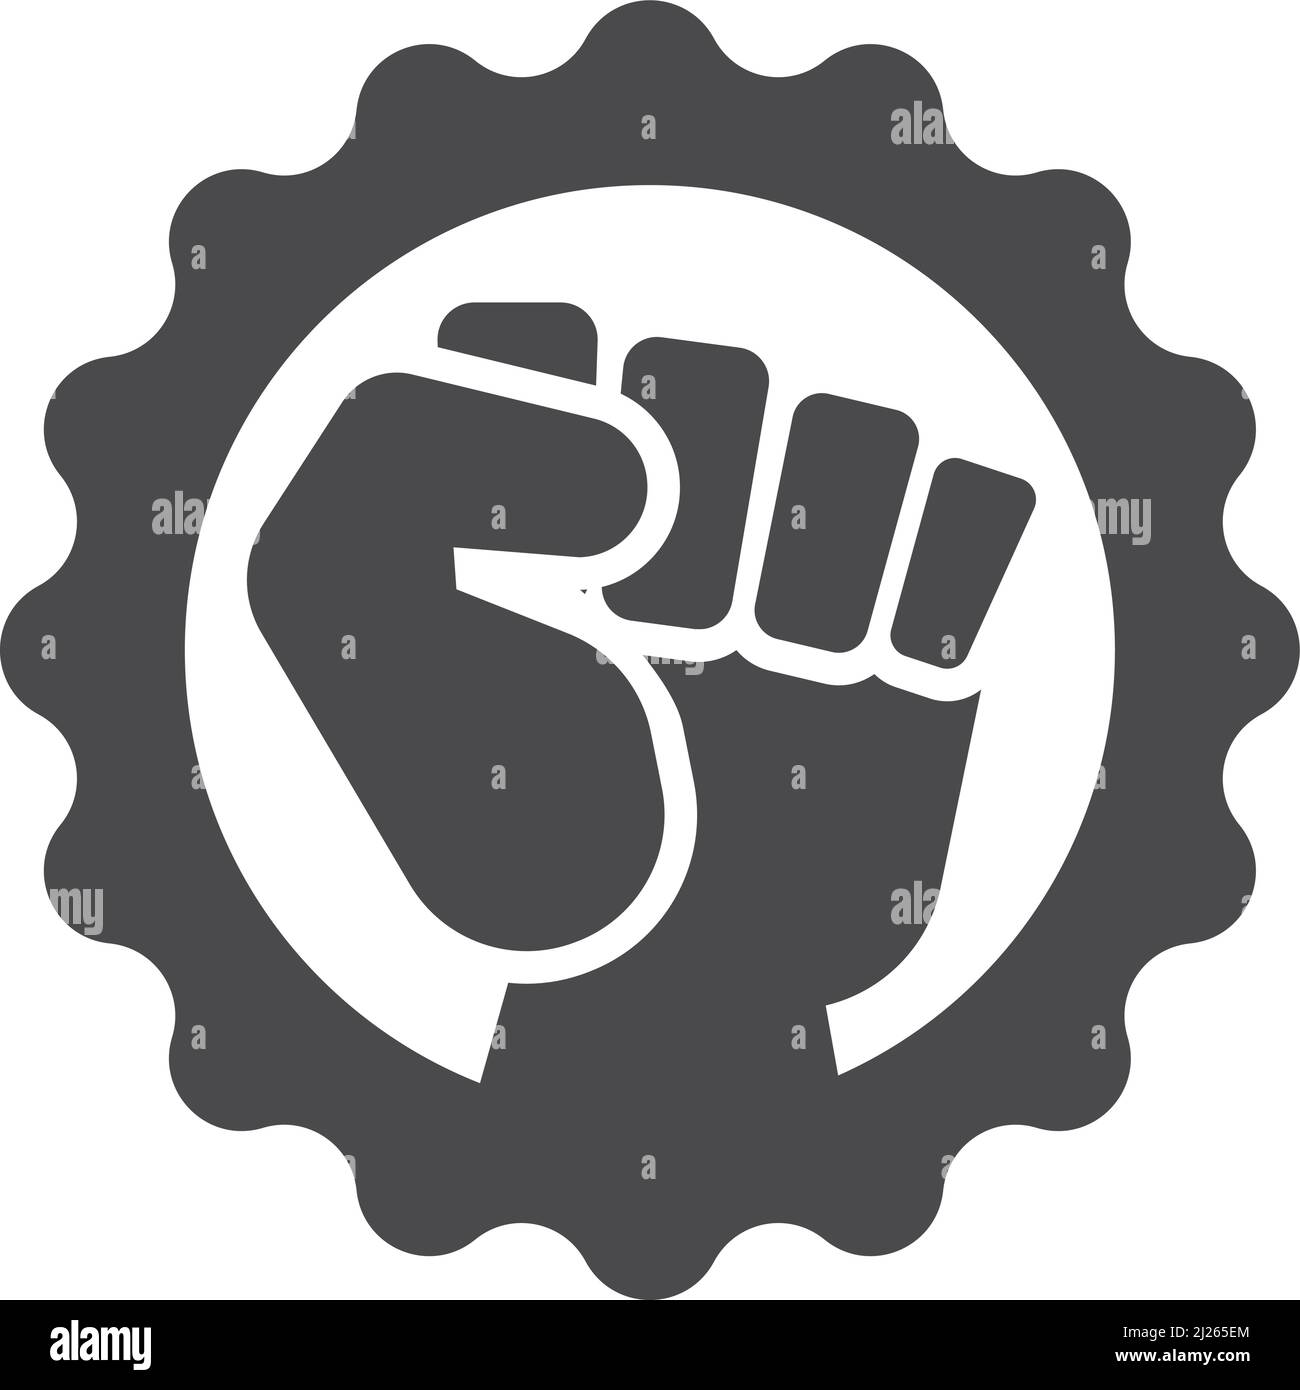 Fist emblem. Power fight sign. Uprising symbol Stock Vector